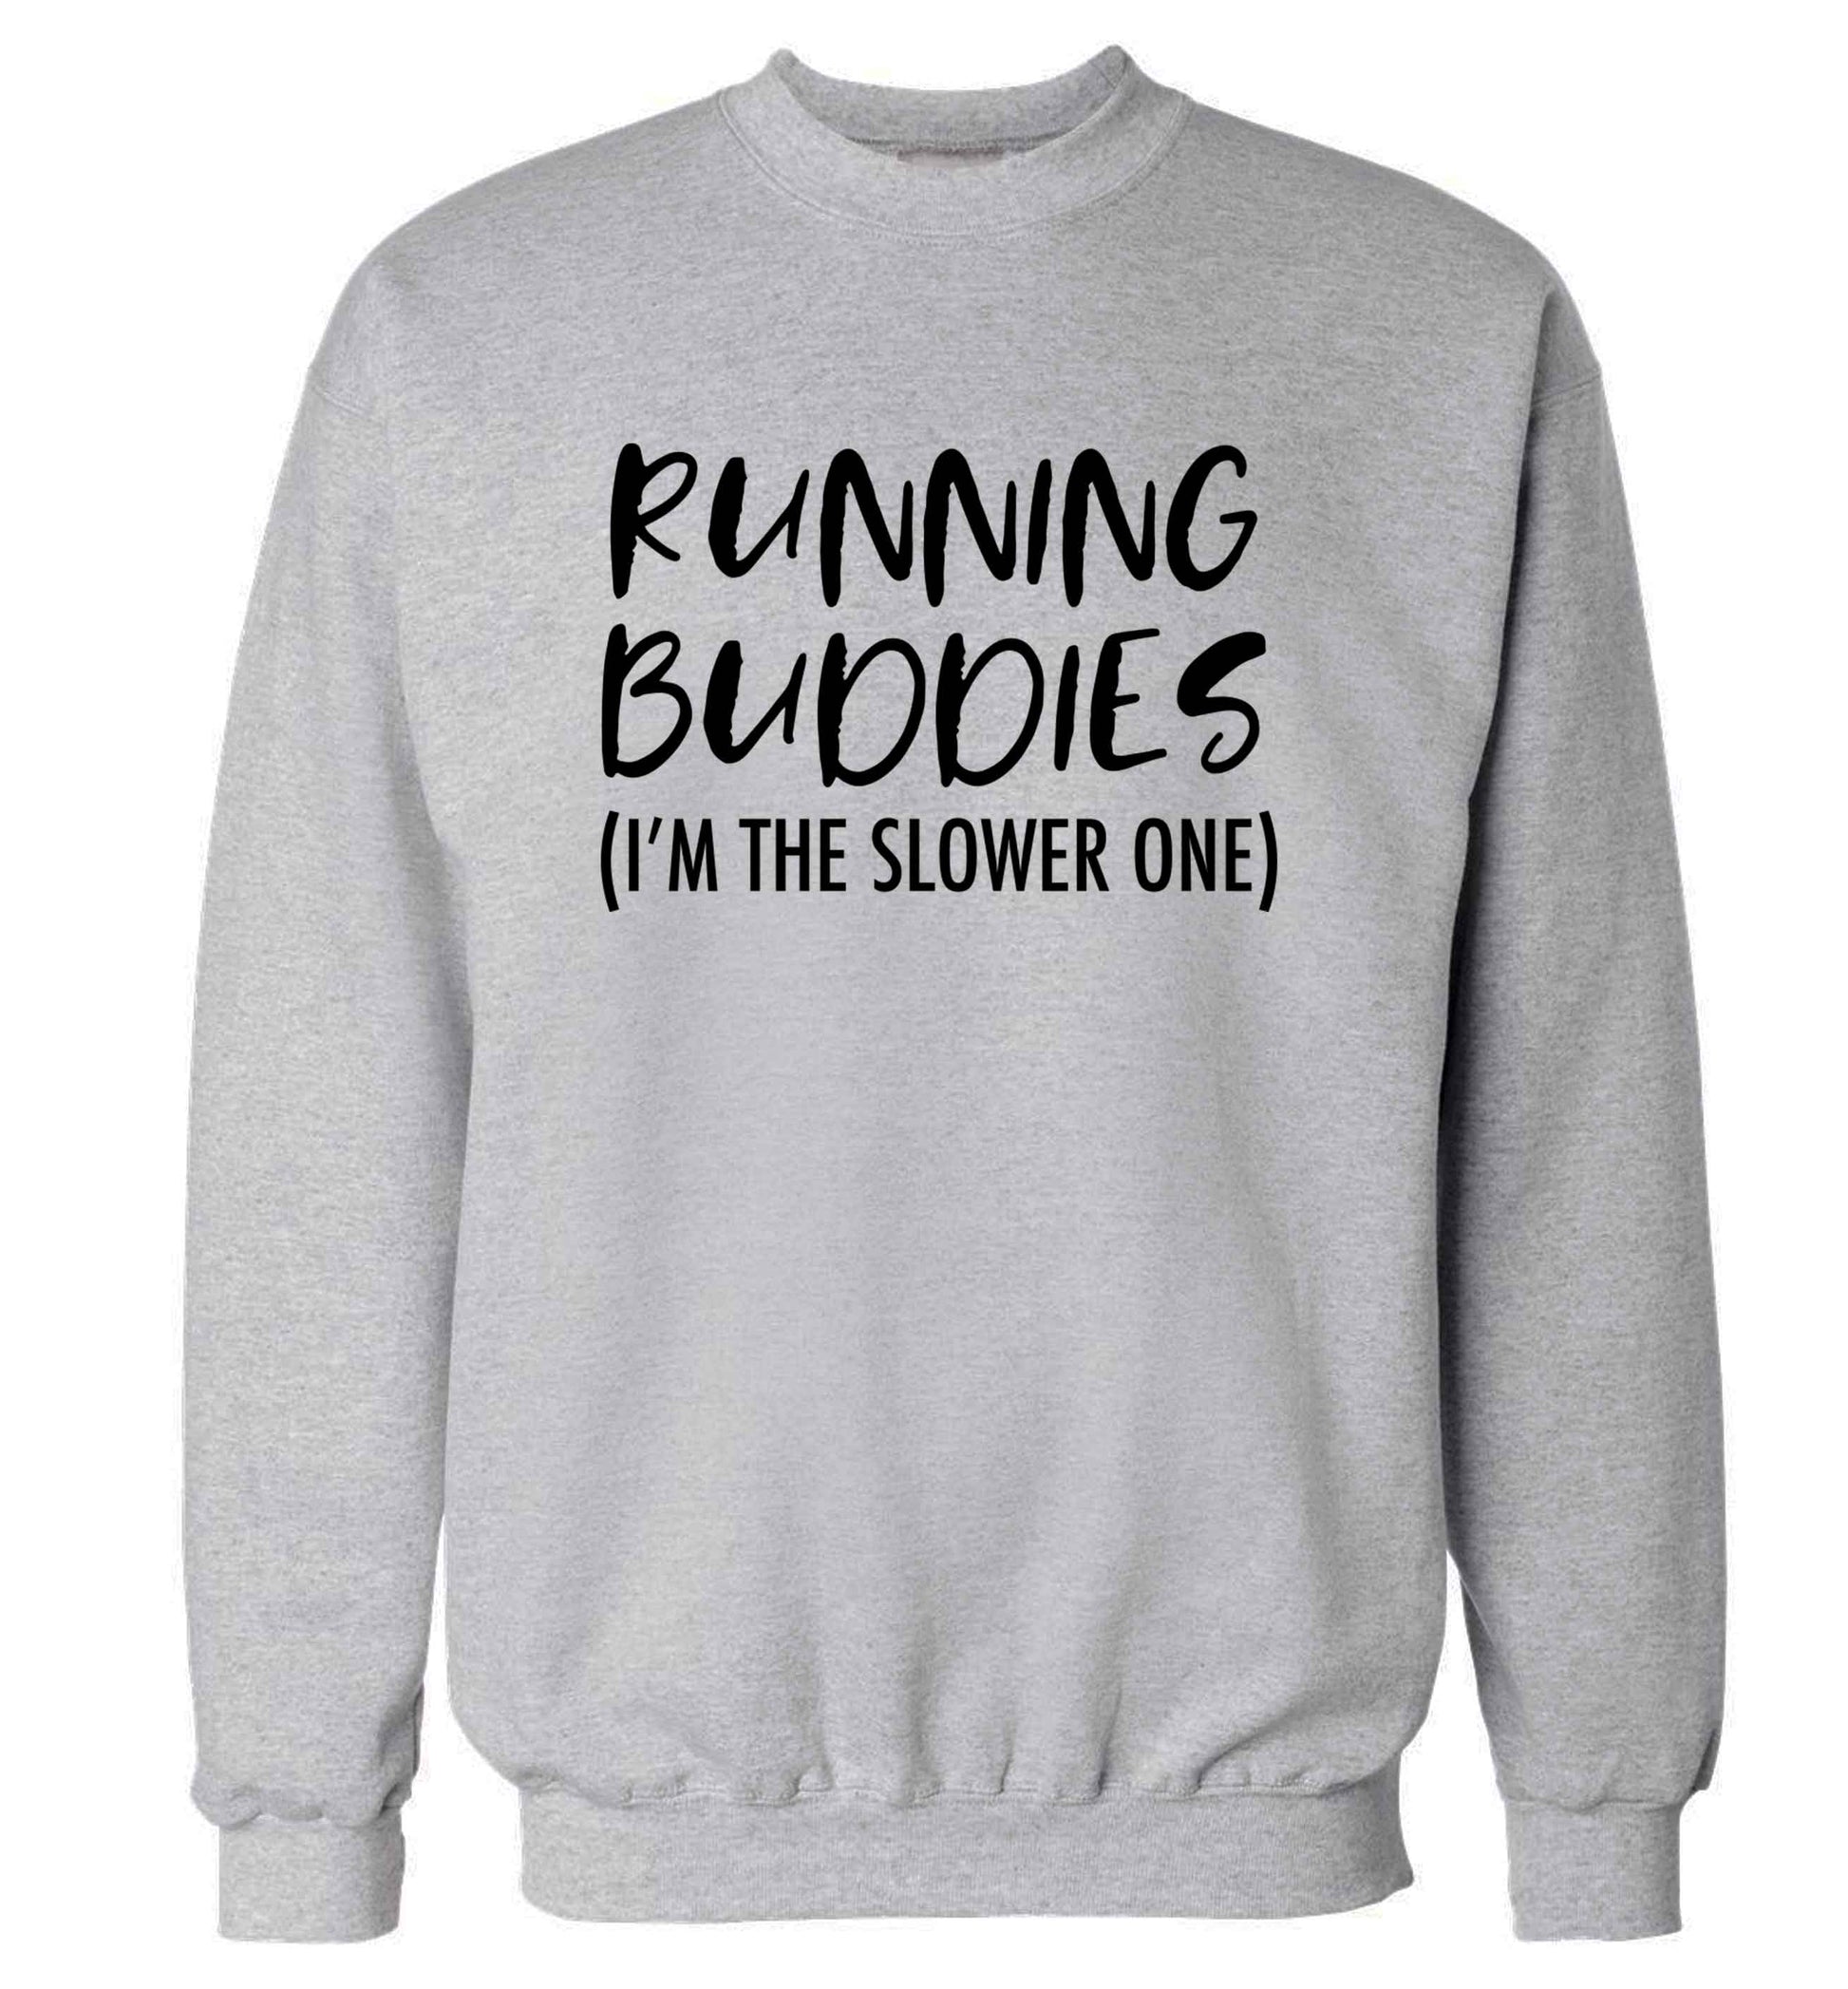 Running buddies (I'm the slower one) adult's unisex grey sweater 2XL